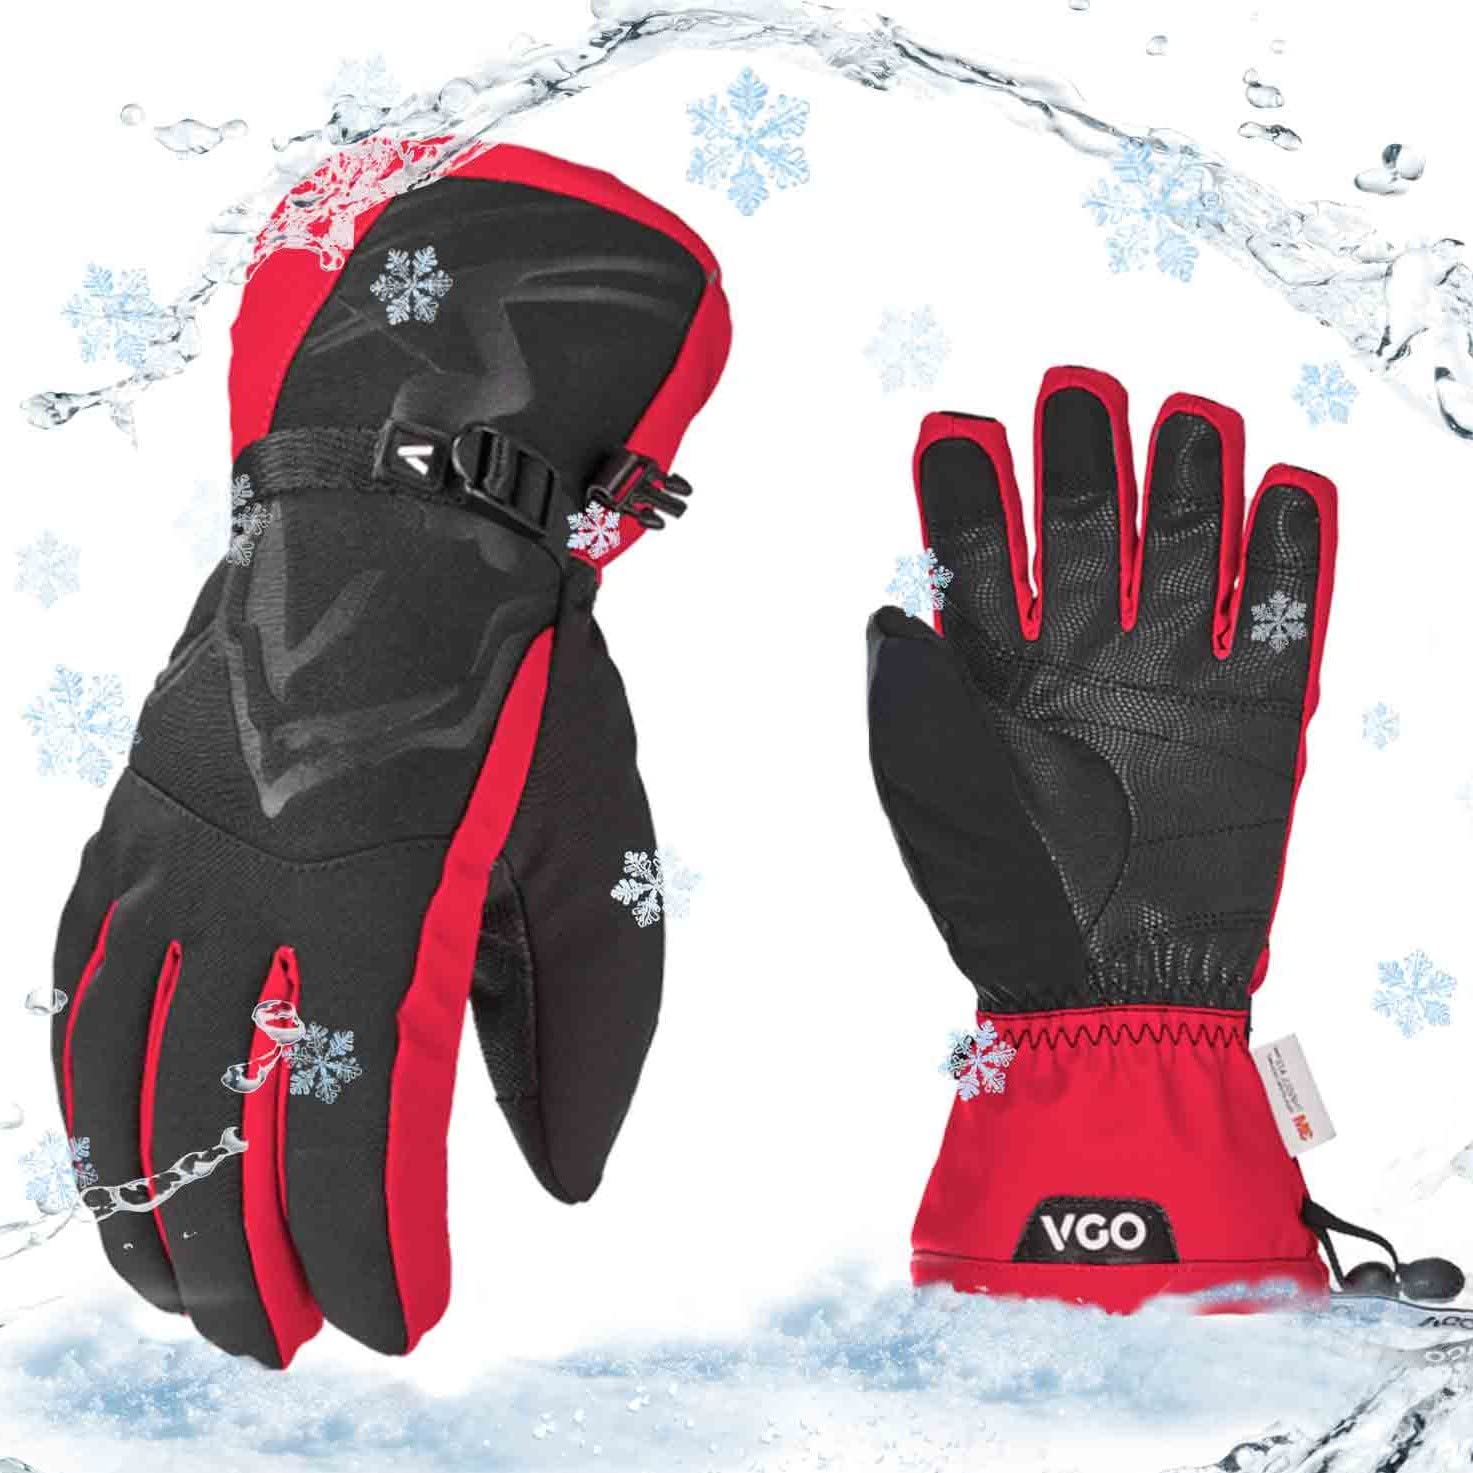 Vgo SL2466FW, warme Skihandschuhe für Damen, Winter-Schneehandschuhe, Outdoor-Handschuhe, 3M Thinsulate, wasserdicht, 1 Paar